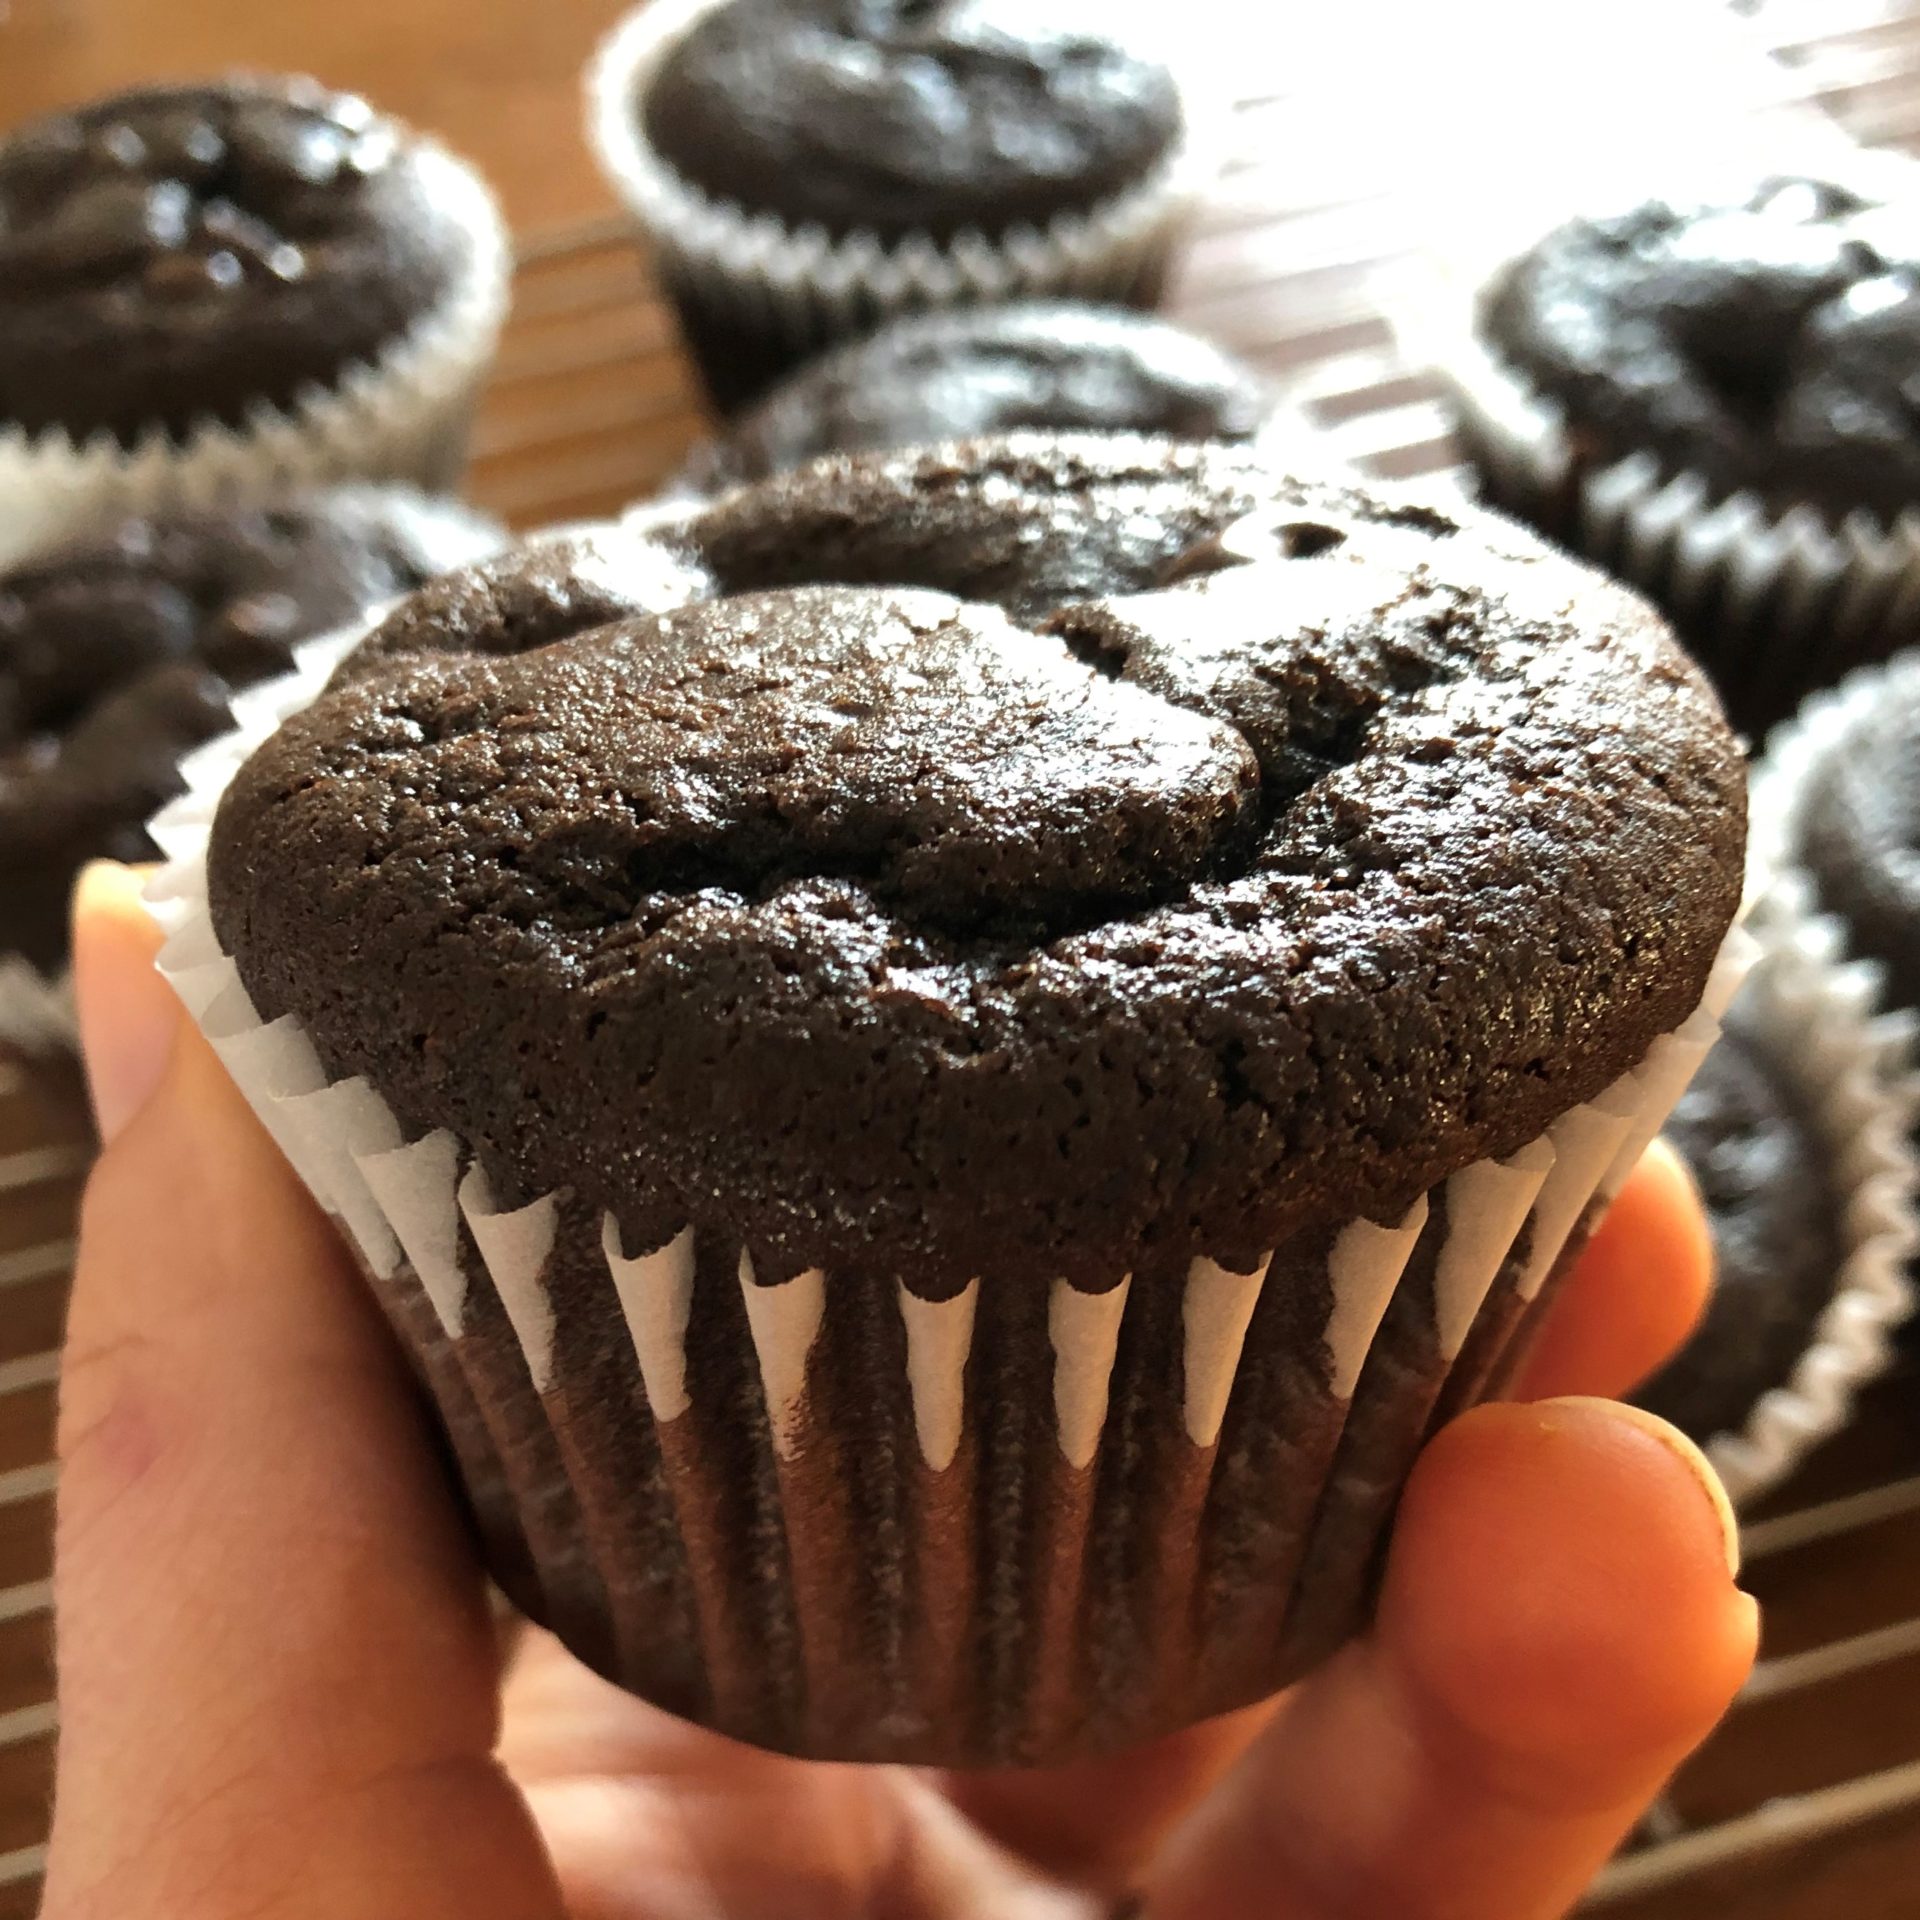 chocolate black bean cupcakes